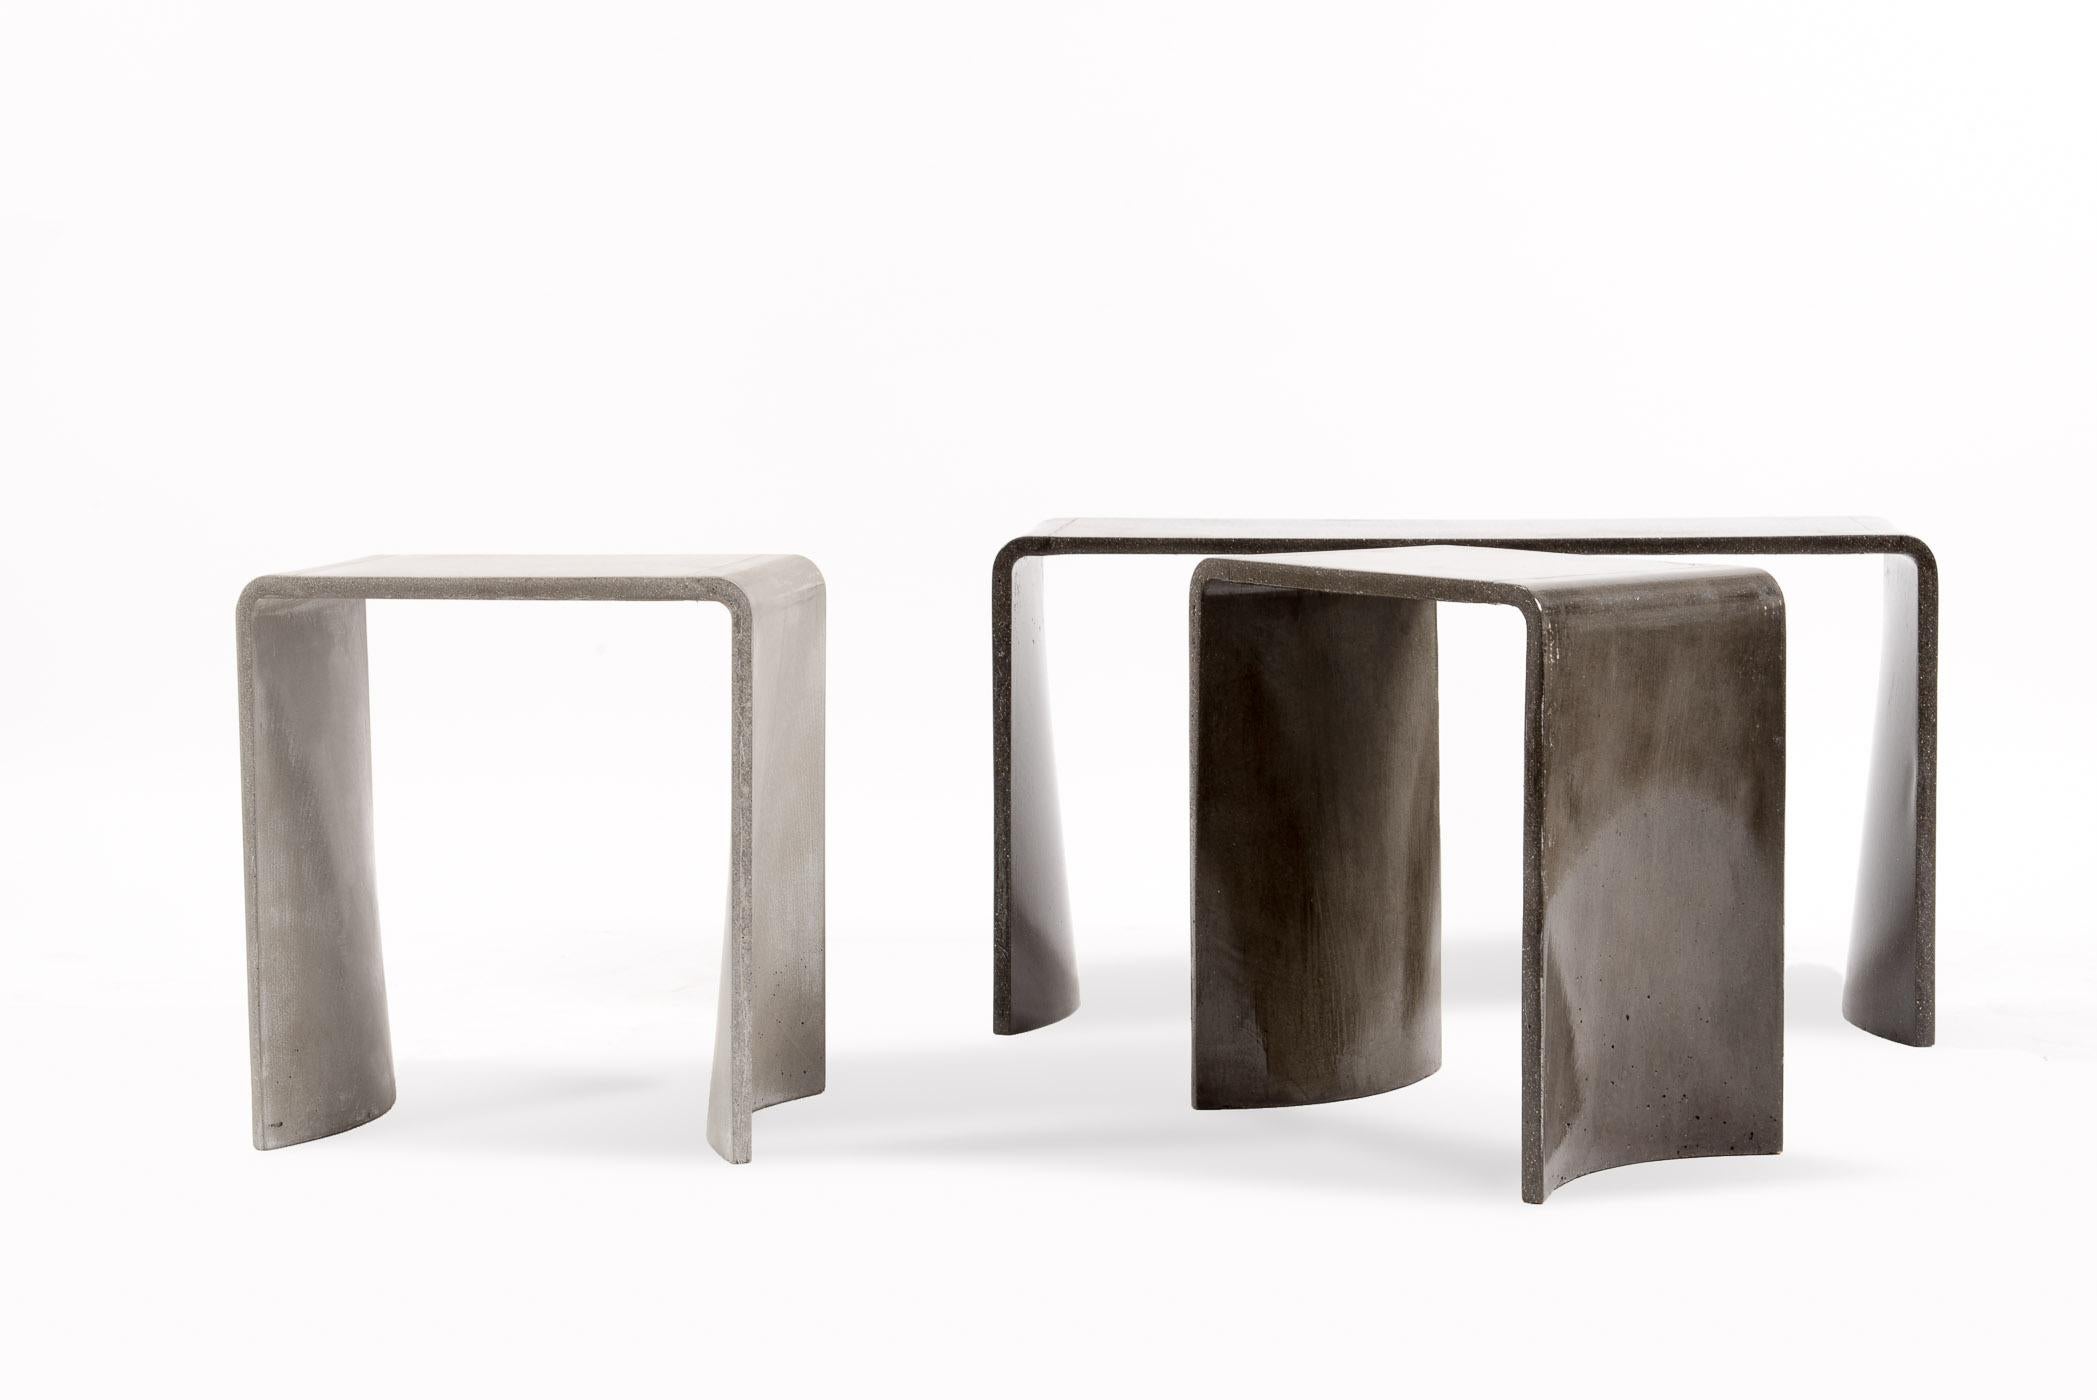 Cast 21st Century Concrete Contemporary Stool & Side Table, Light Grey Cement Color For Sale